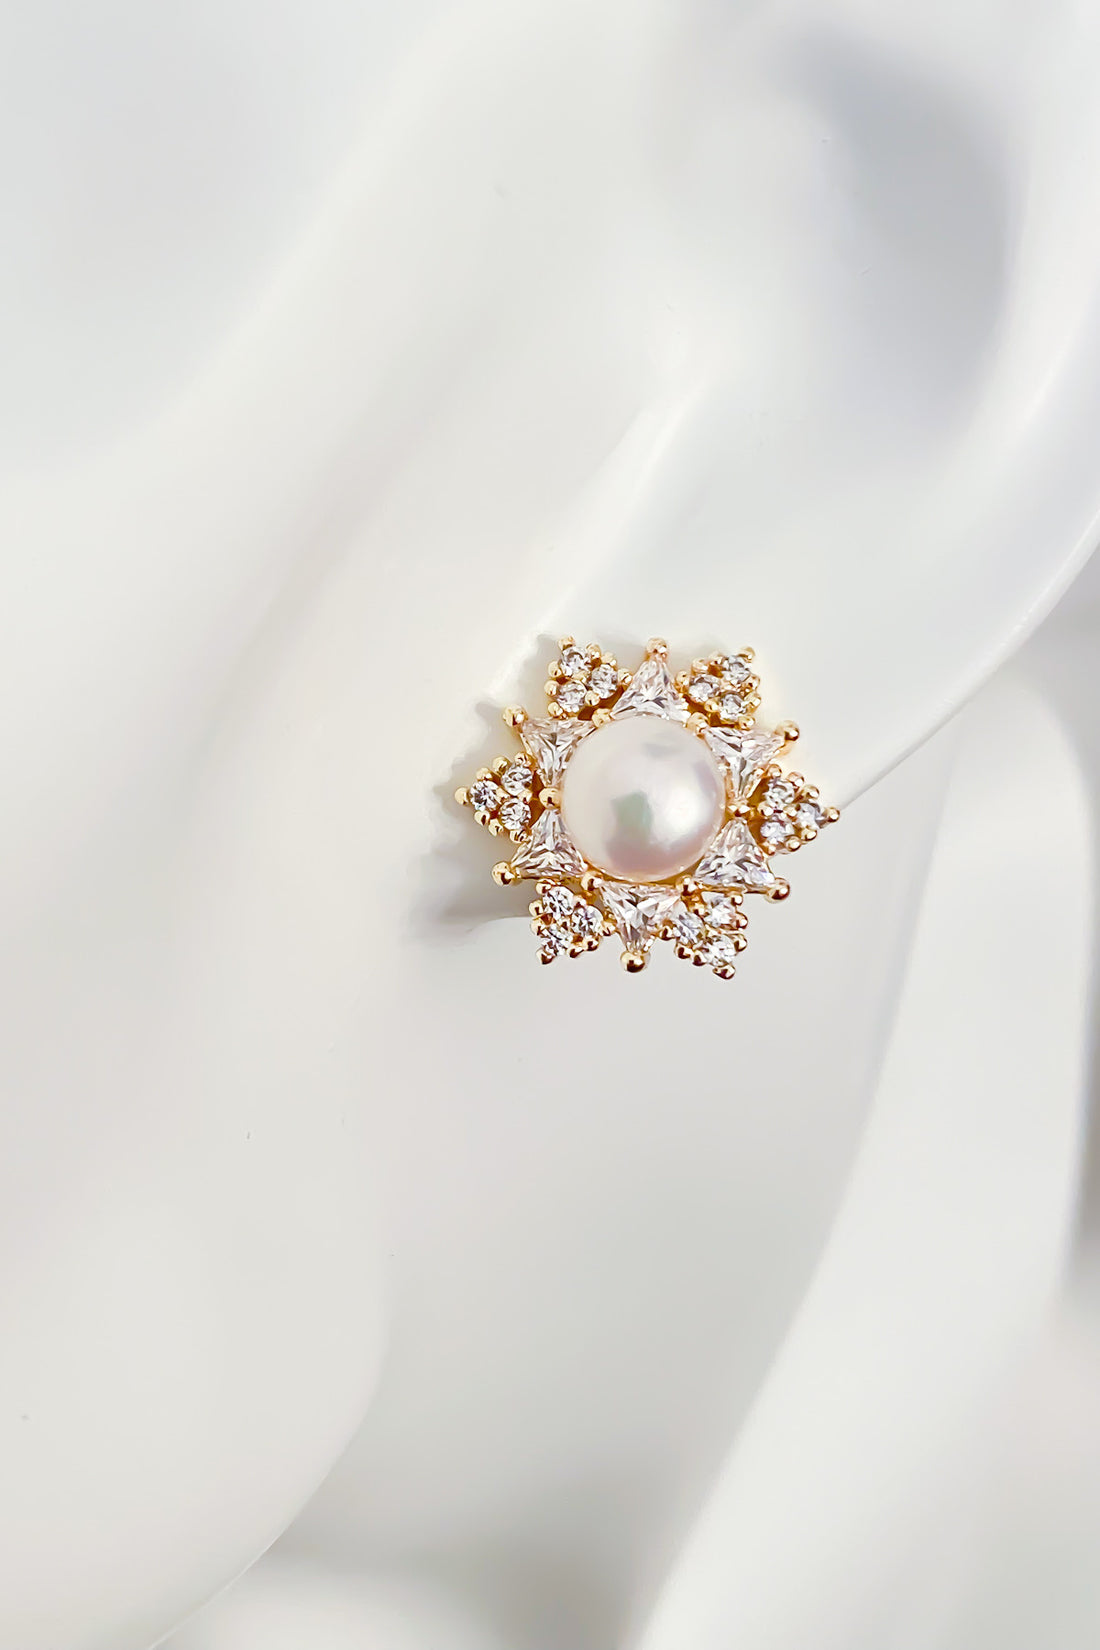 SKYE San Francisco Shop Chic Modern Elegant Classy Women Jewelry French Parisian Minimalist Elisa 18K Gold Crystal Pearl Earrings 4